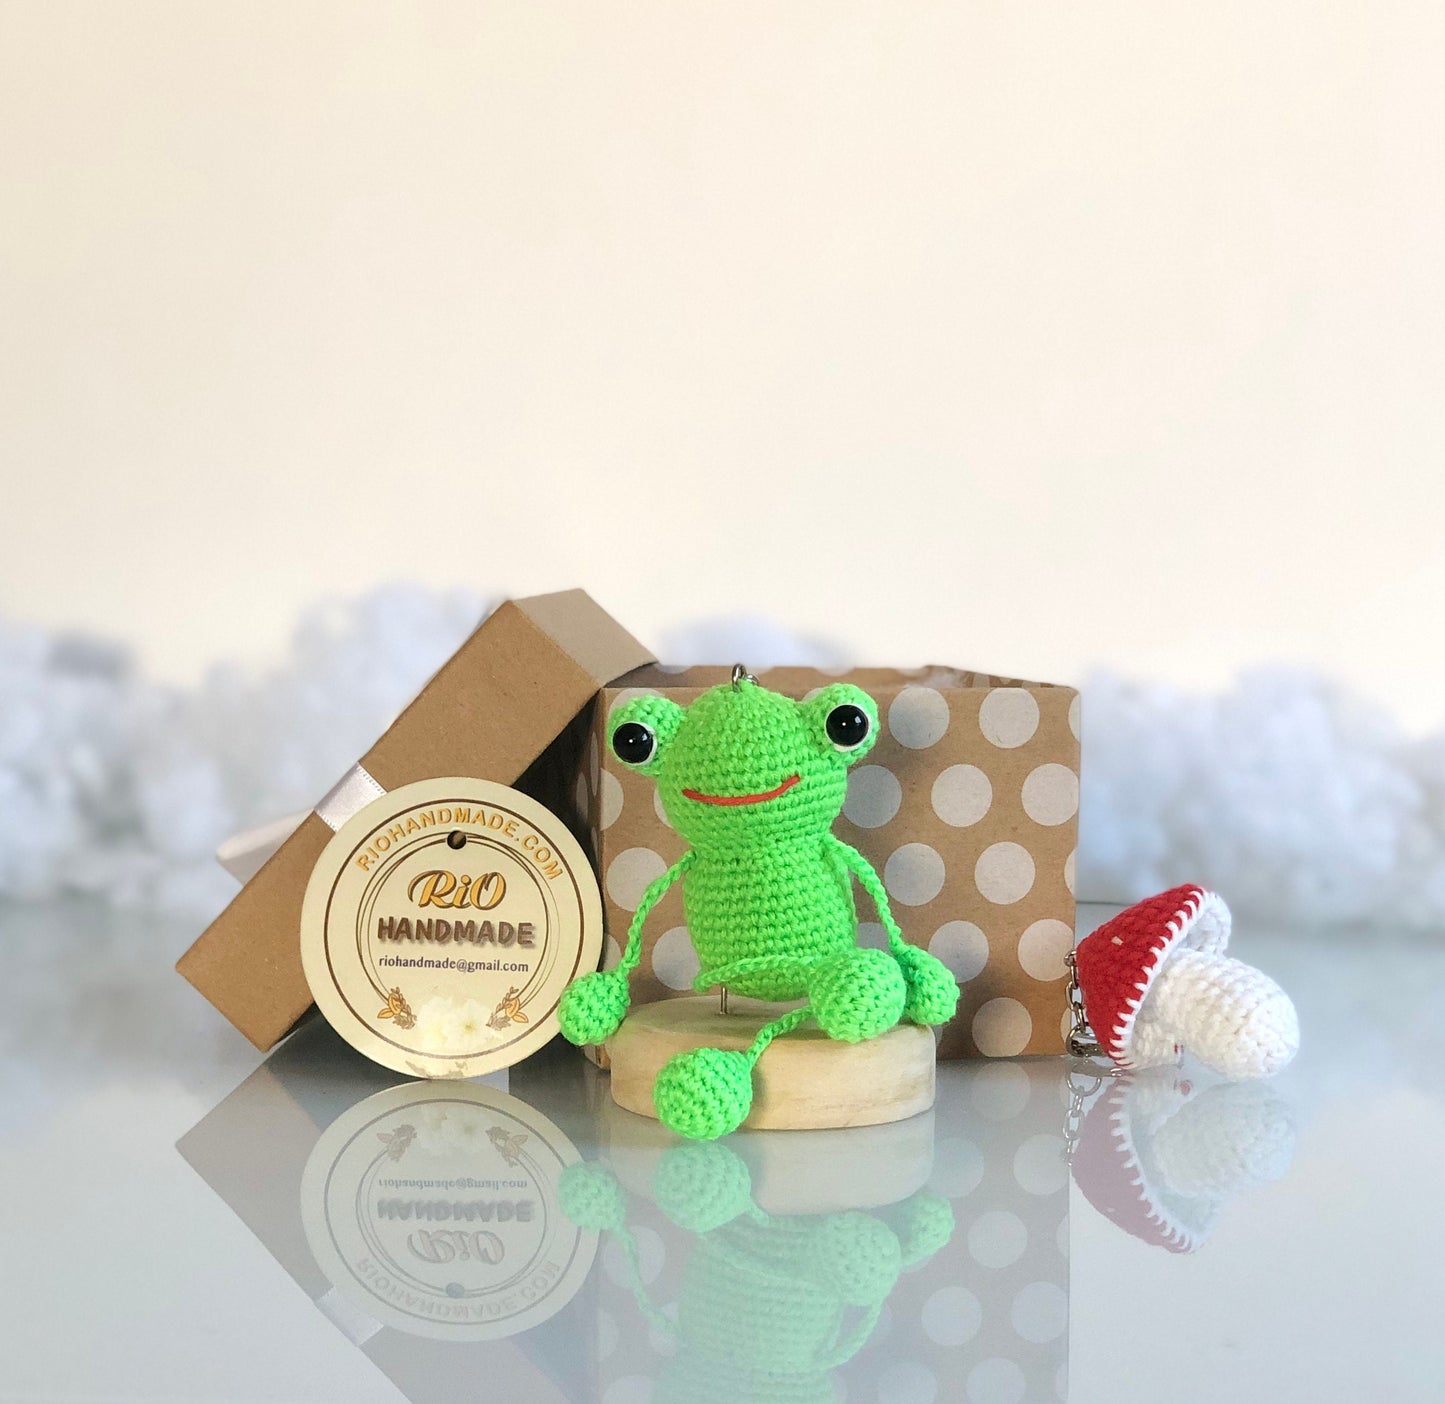 Handmade frog crochet keychain mirror charm crochet amigurumi, plushie toy, gift, car hanging accessory